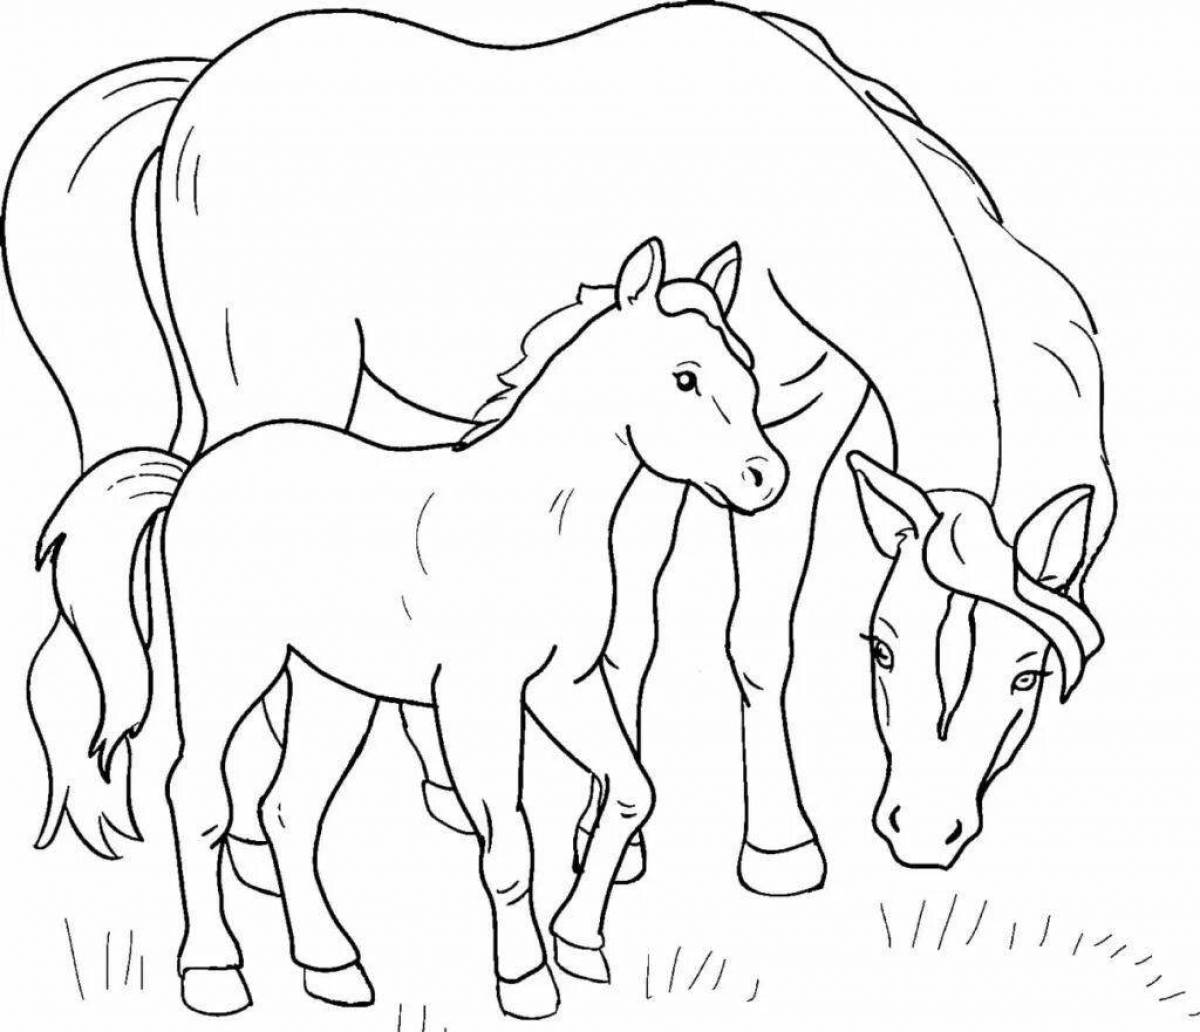 Shine horse family coloring book